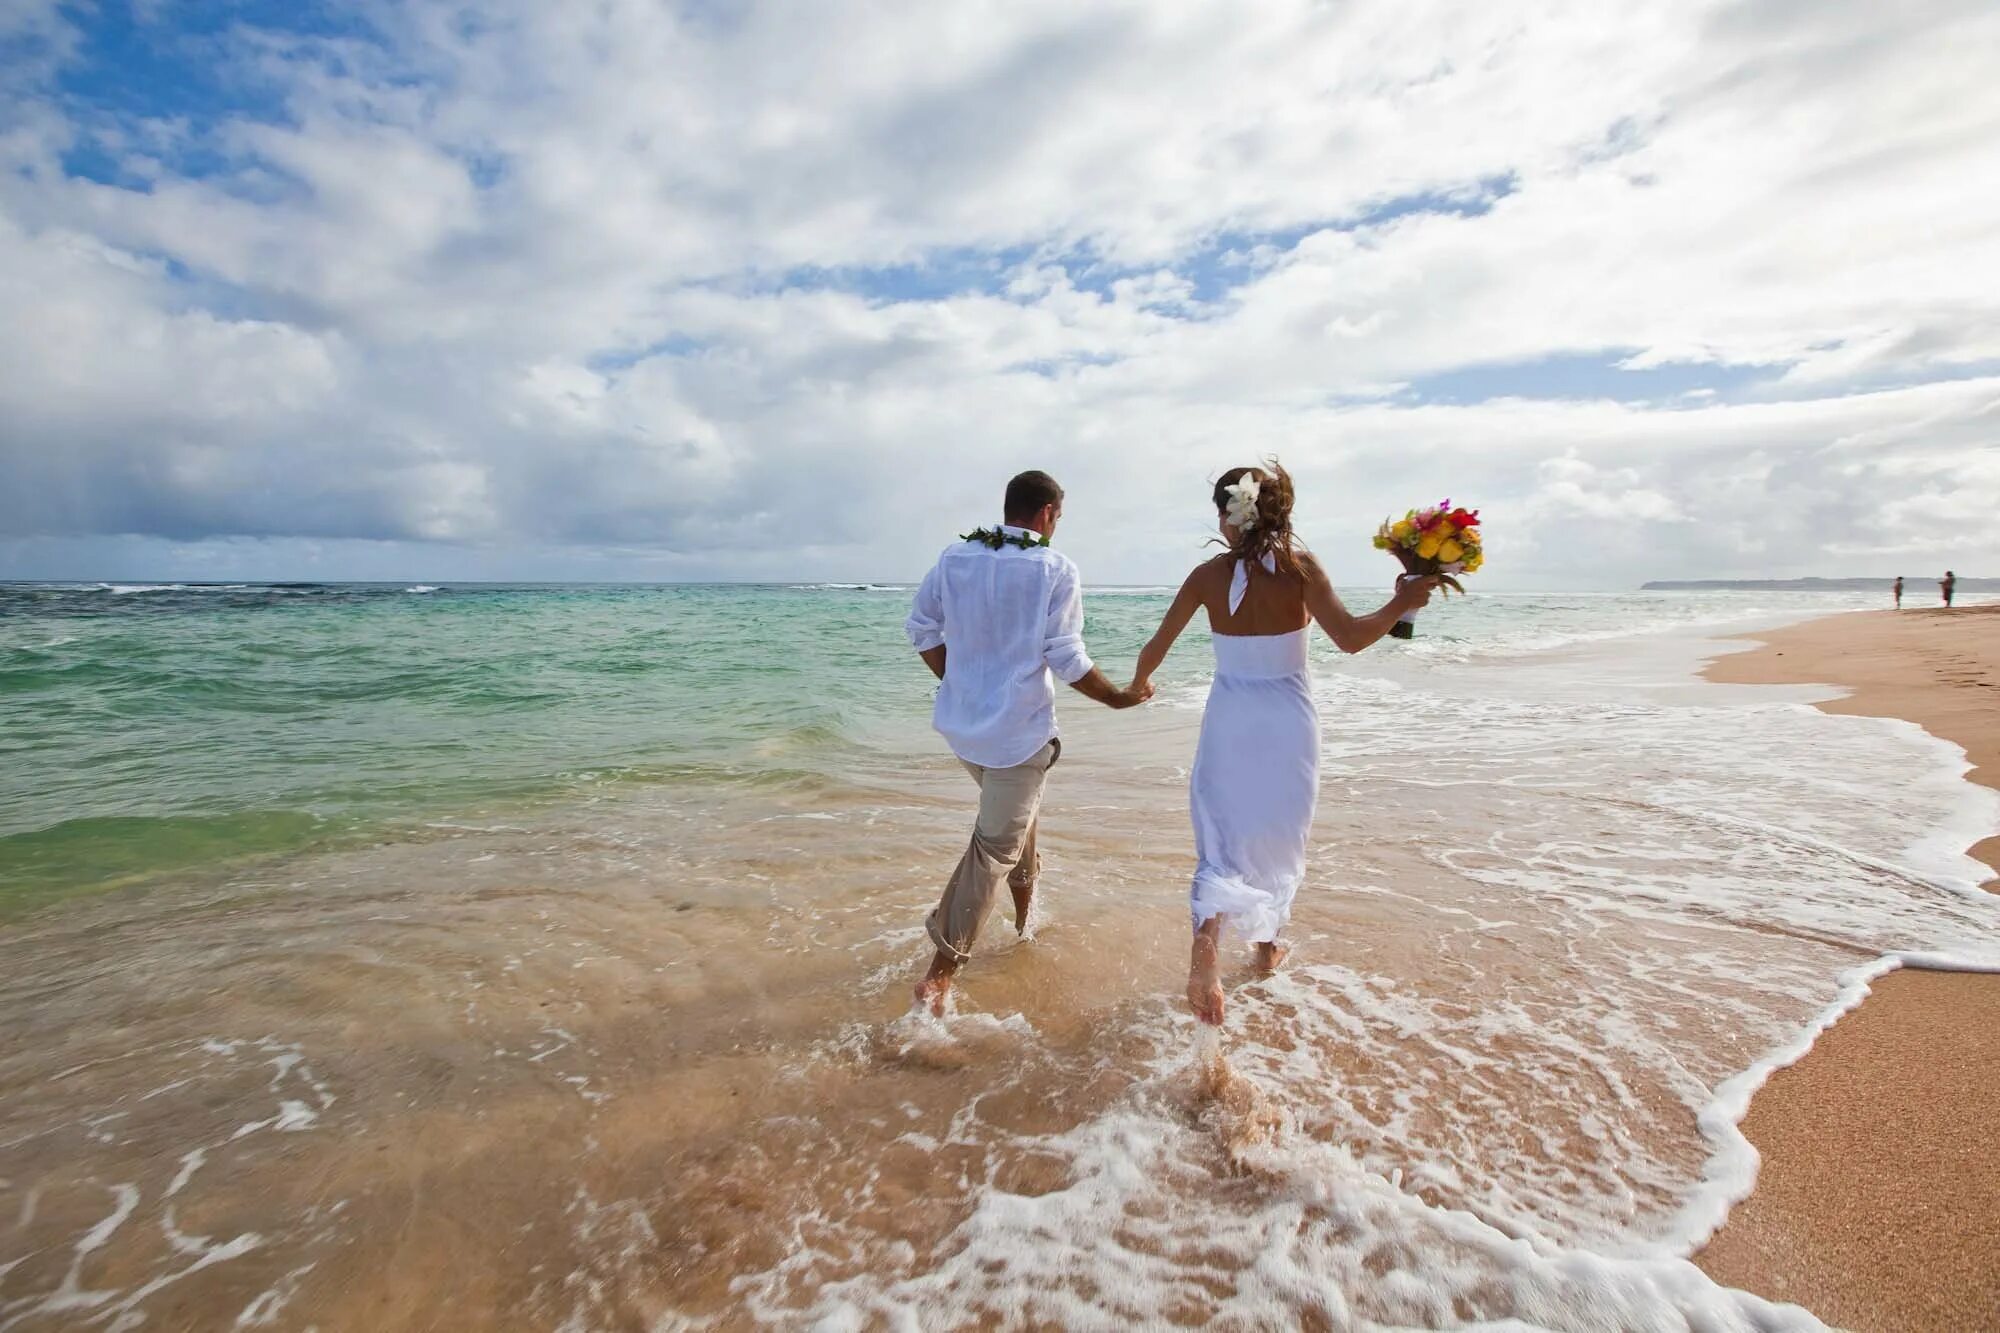 Свадьба на море. Свадьба у океана. Свадьба на берегу моря. Свадебная фотосессия на море. Предложение на берегу океана